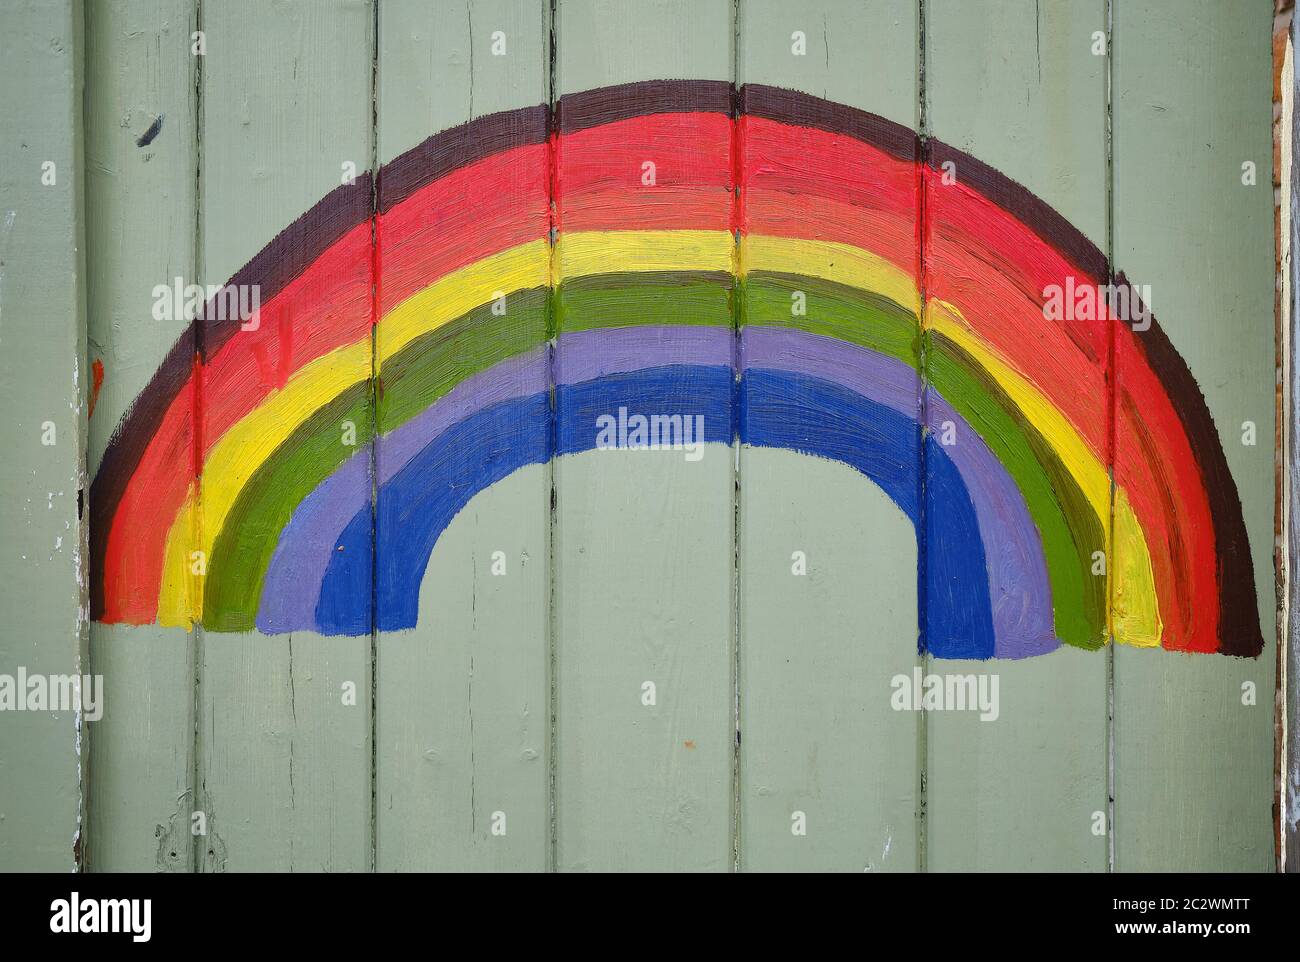 Puerta arcoiris fotografías e imágenes de alta resolución - Alamy